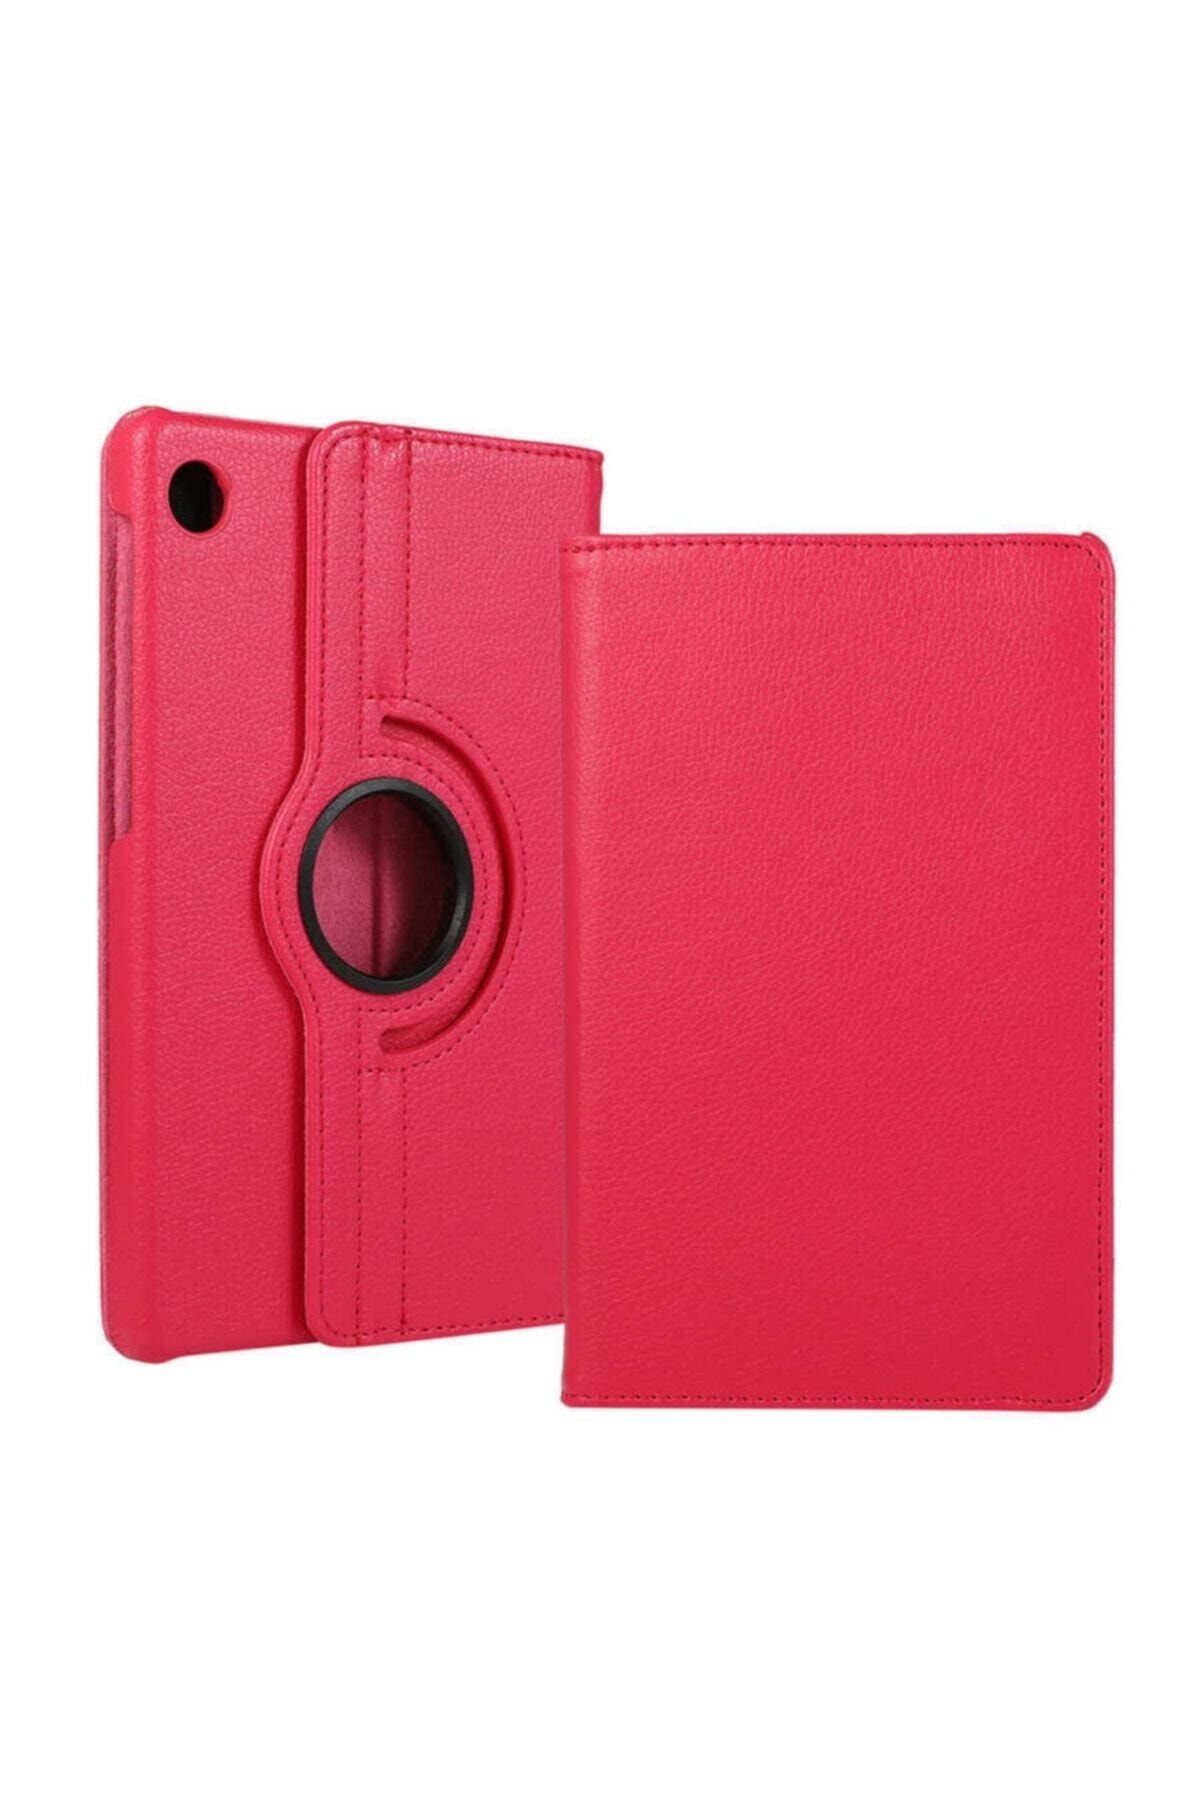 TEKNETSTORE Honor Pad X8 3gb 32gb Wi-fi 10.1 Inç Uyumlu Kılıf 360° Dönebilen Deri Leather New Style Cover Case